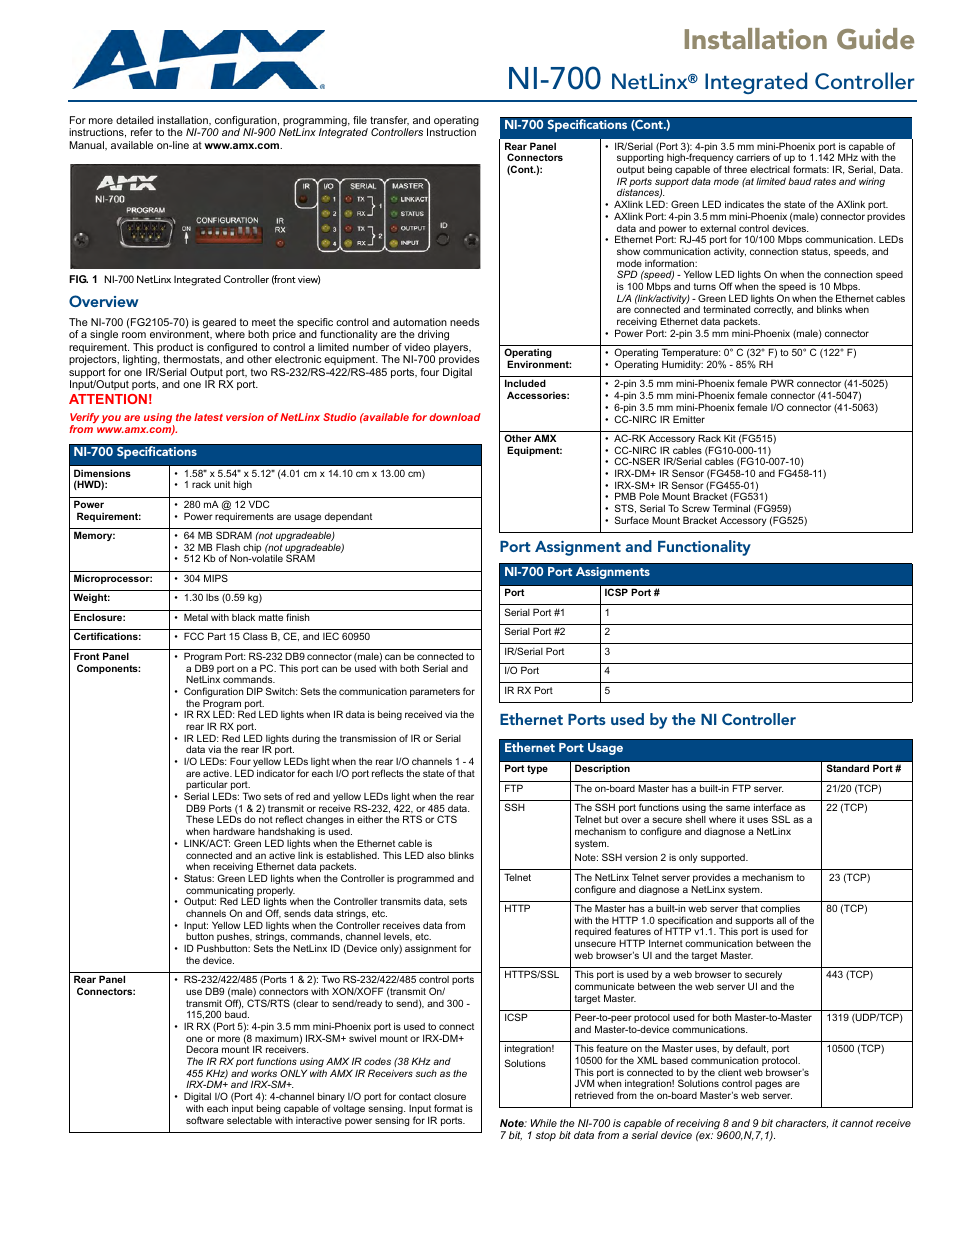 NetLinx Integrated Controller NI-700 (Page 1)